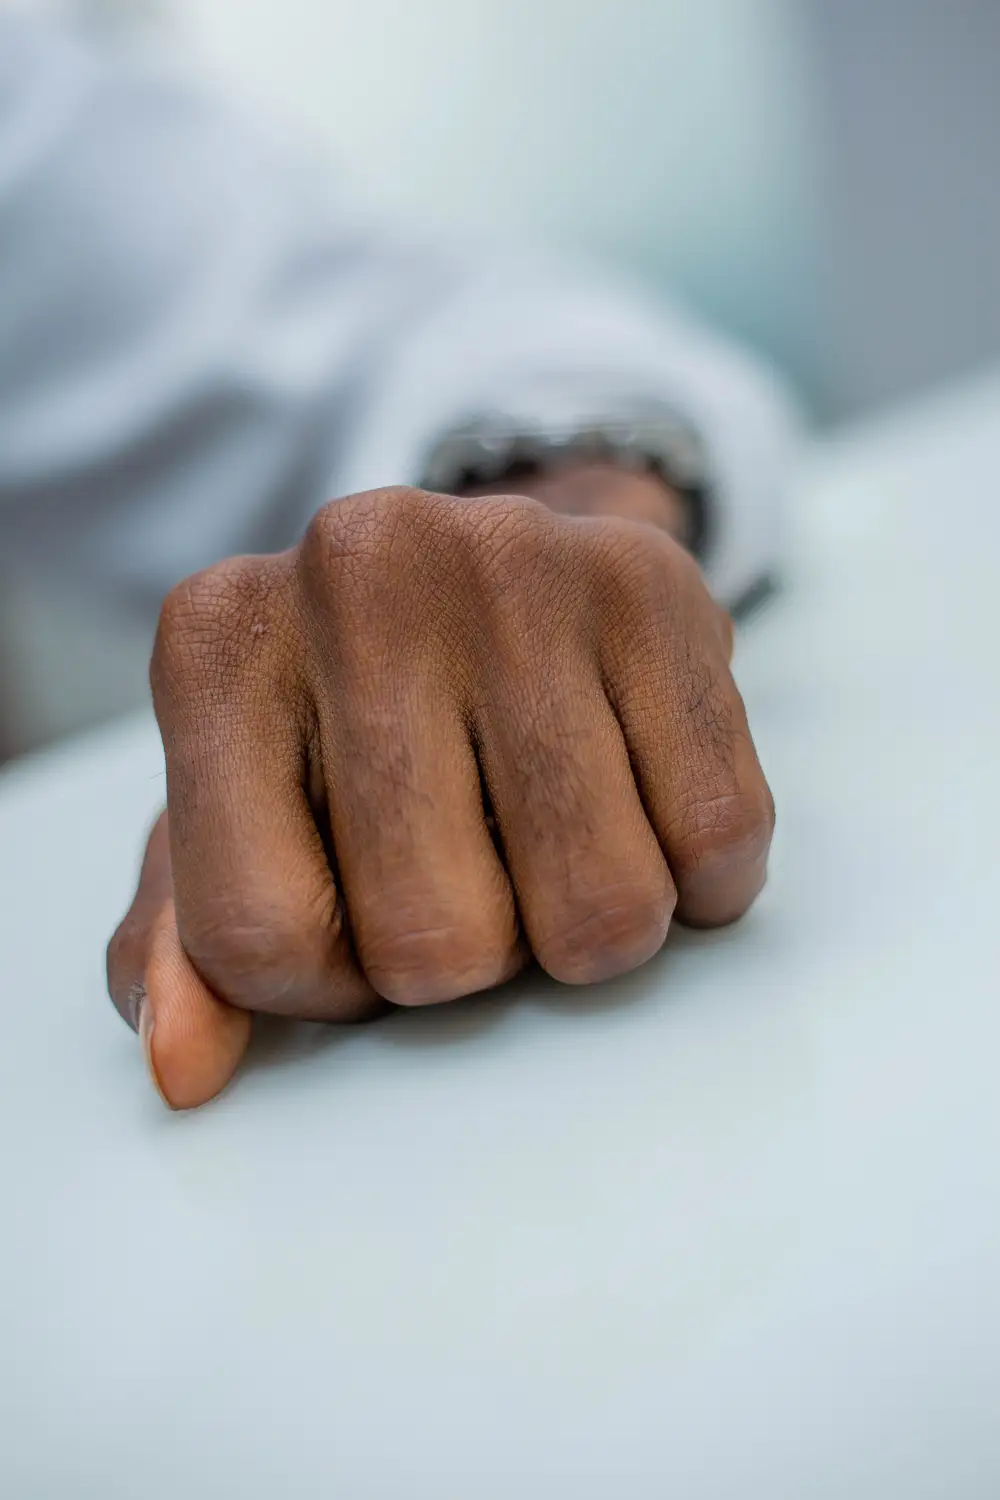 a photo of a man's fist